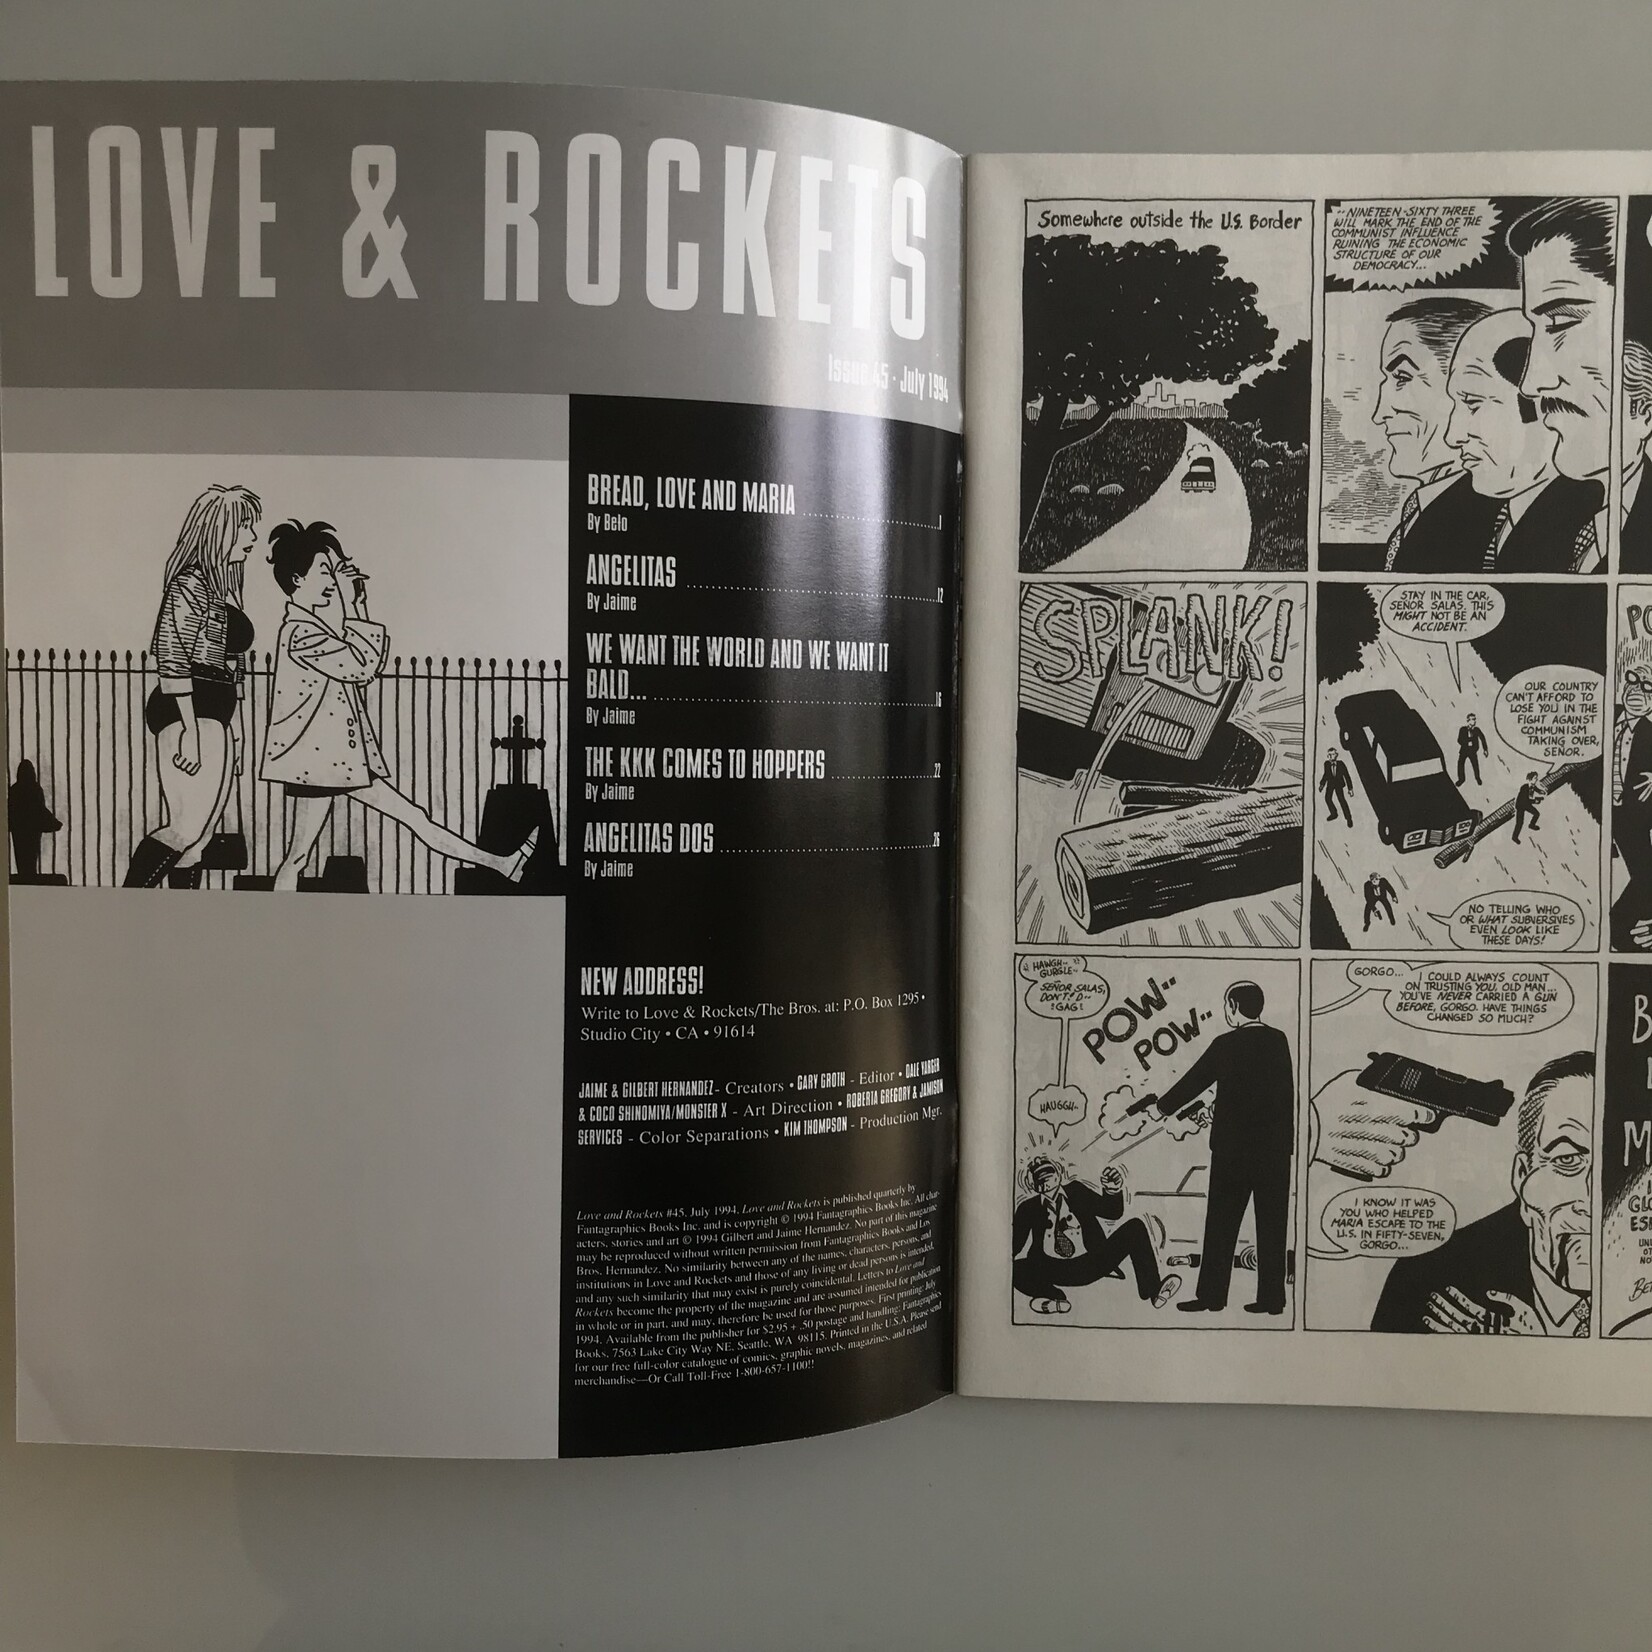 Love & Rockets - Vol. 1 #45 July 1994 - Comic Book